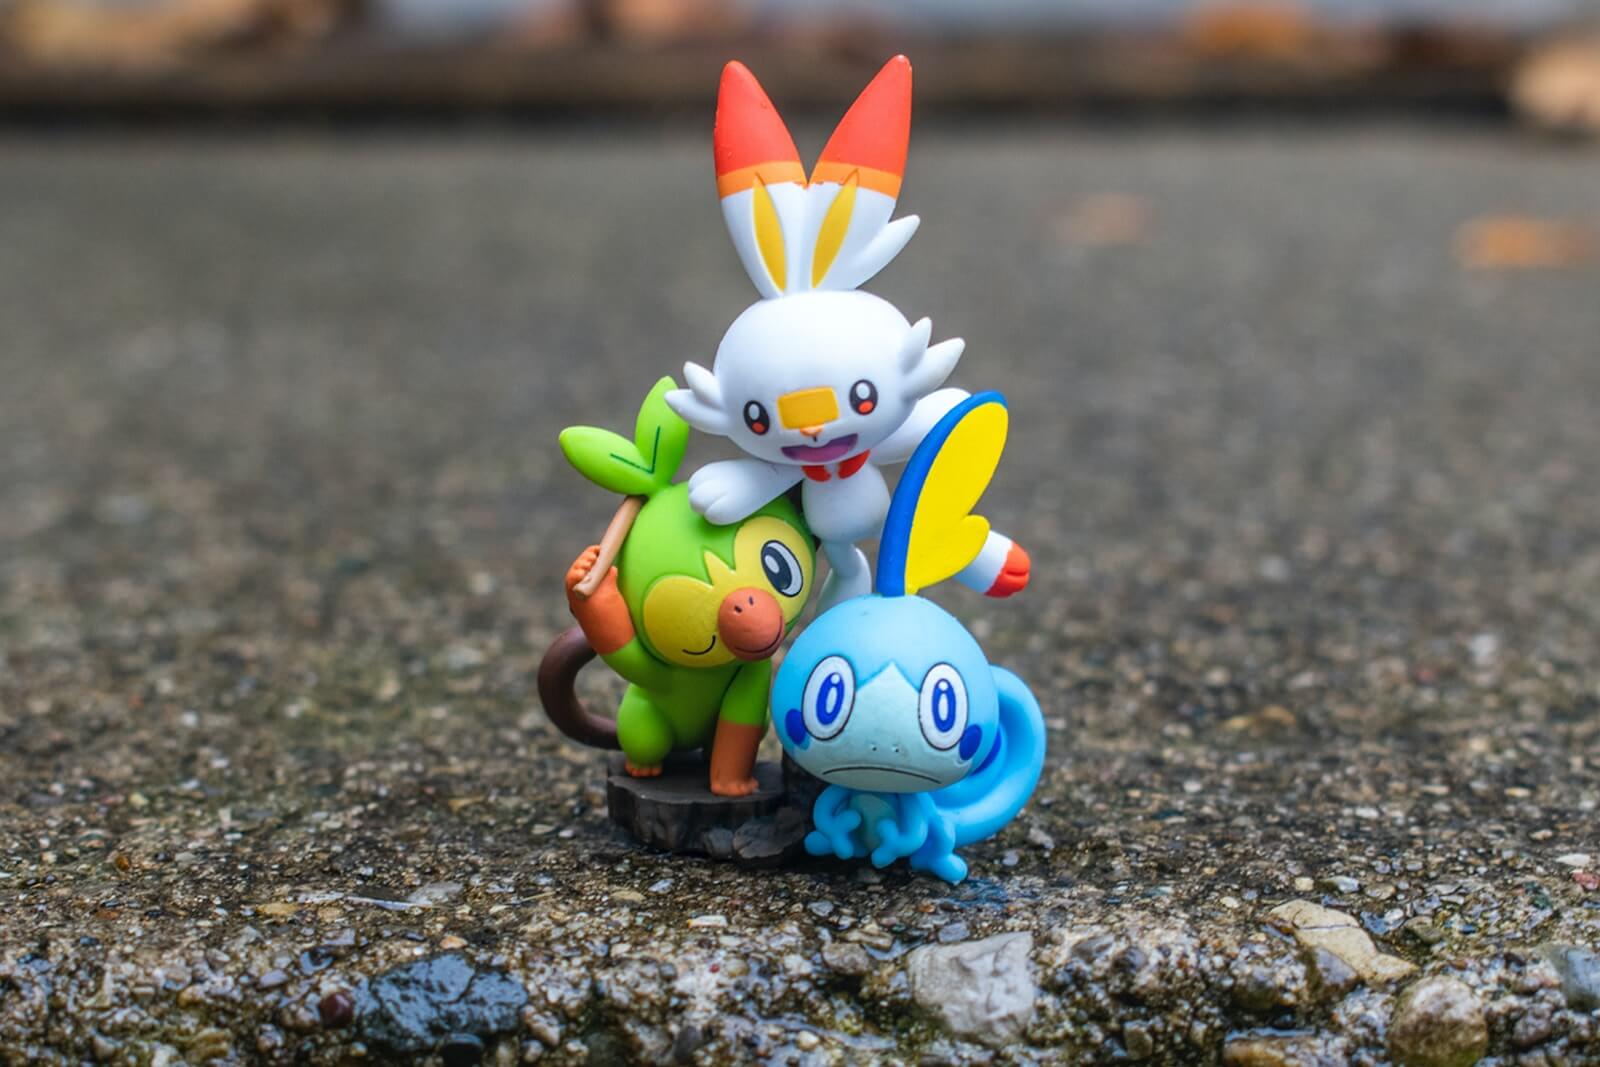 a group of generation 8 pokemon figurines Photo by Halfcut Pokemon on Unsplash